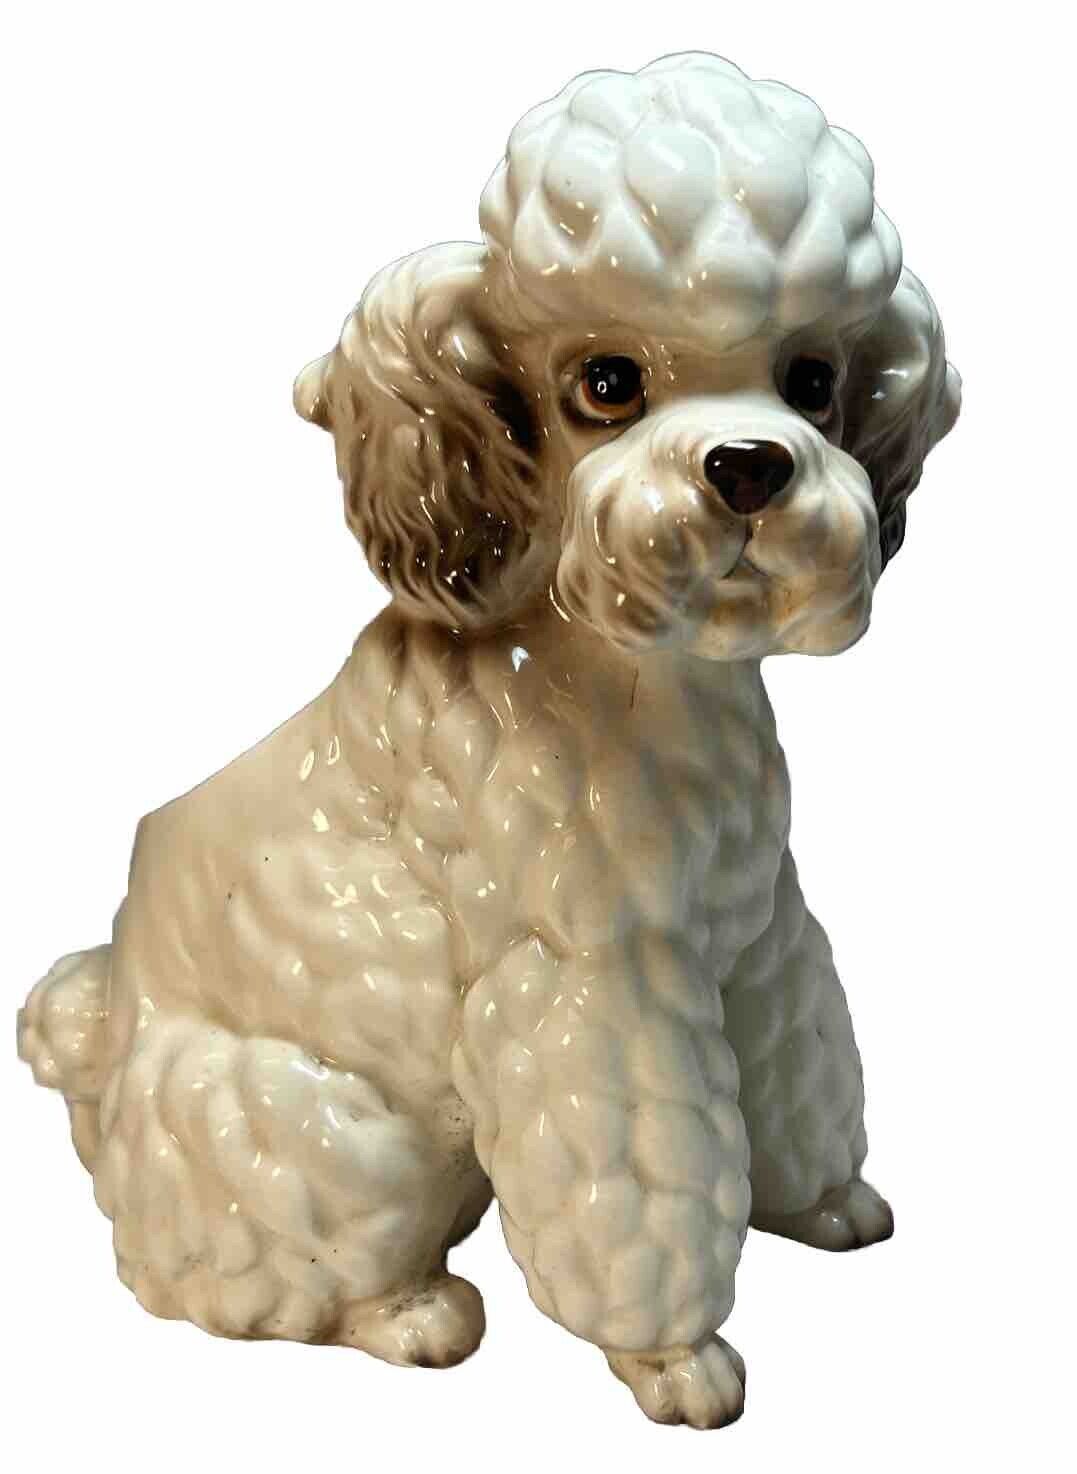 Vintage Relpo Japan Poodle Dog Planter White Ceramic #2030  Figurine 8” Perfect